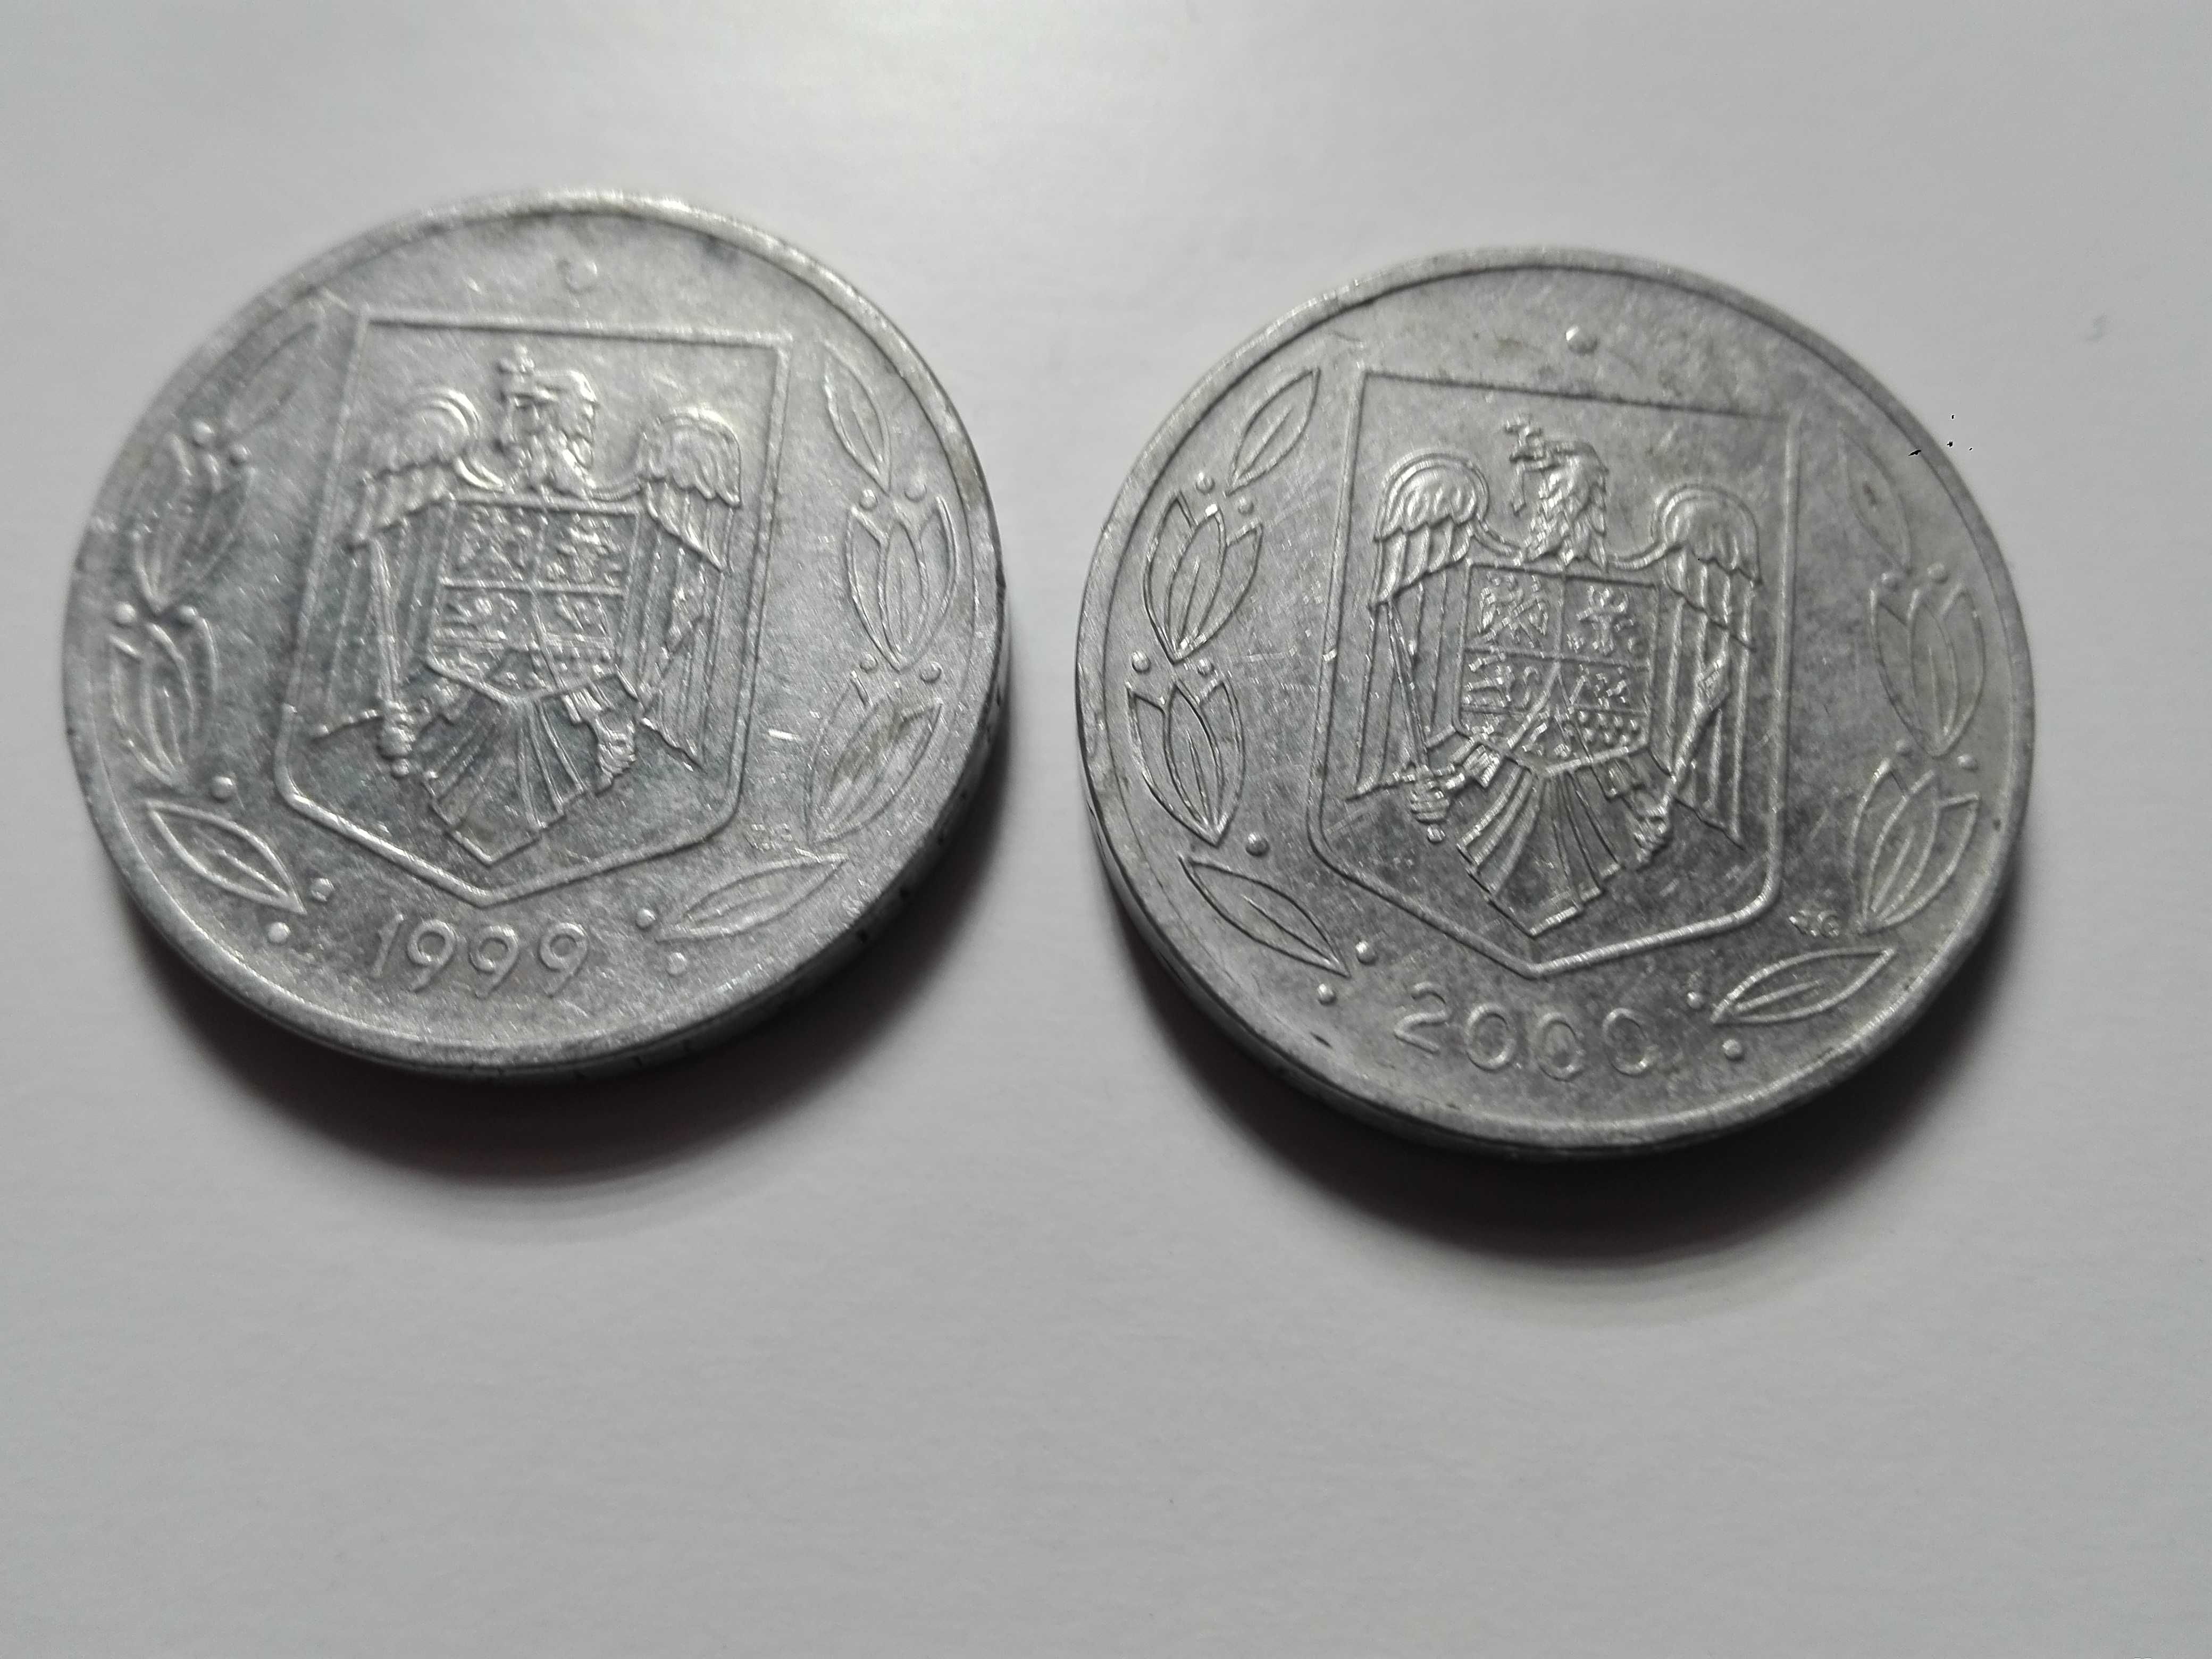 Monede rare de colectie 500 lei anii 1999 si 2000